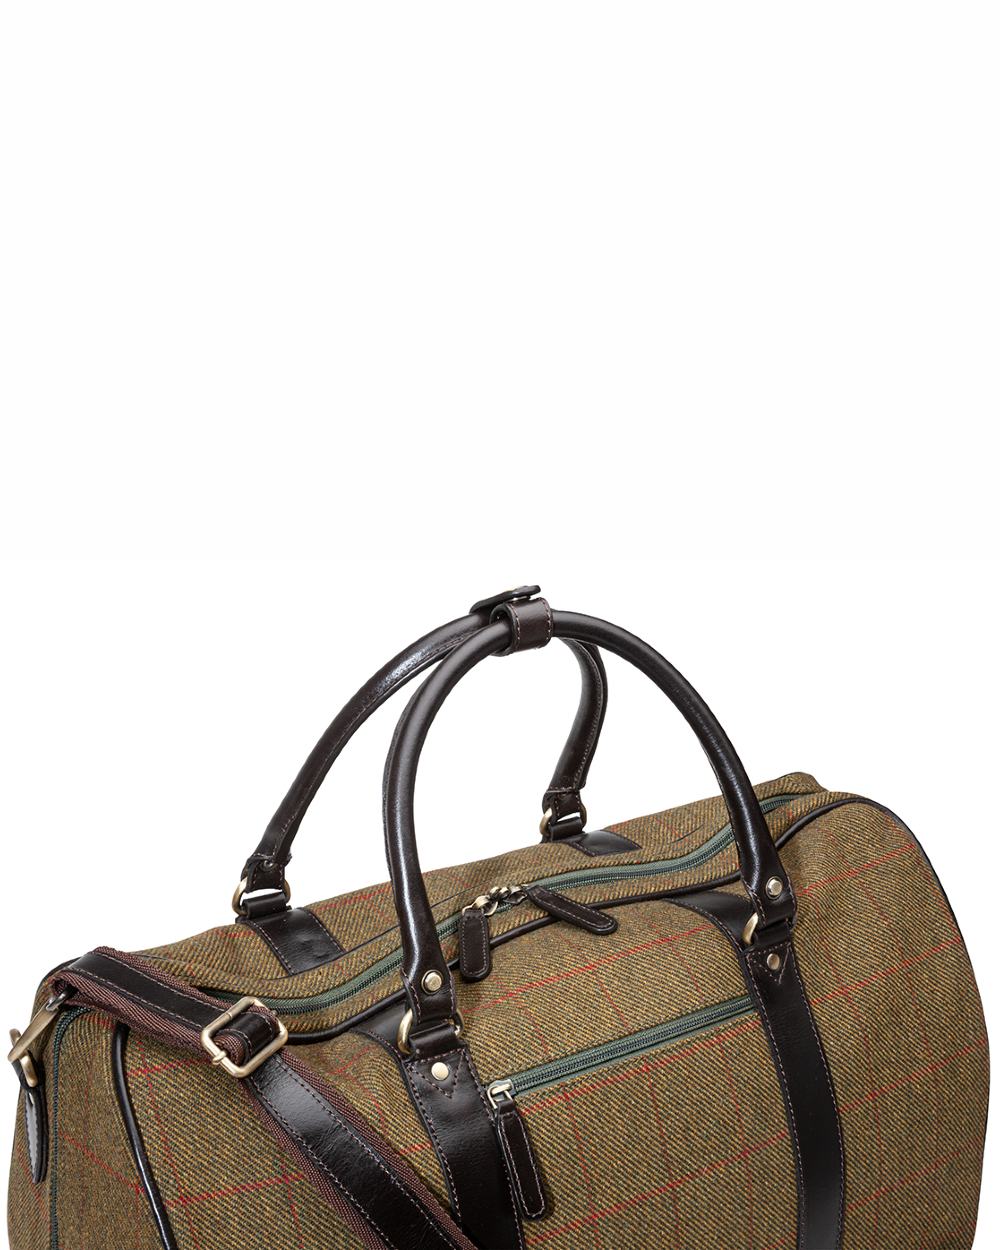 Hambledon Tweed coloured Parker-Hale Duffle Bag on white background 